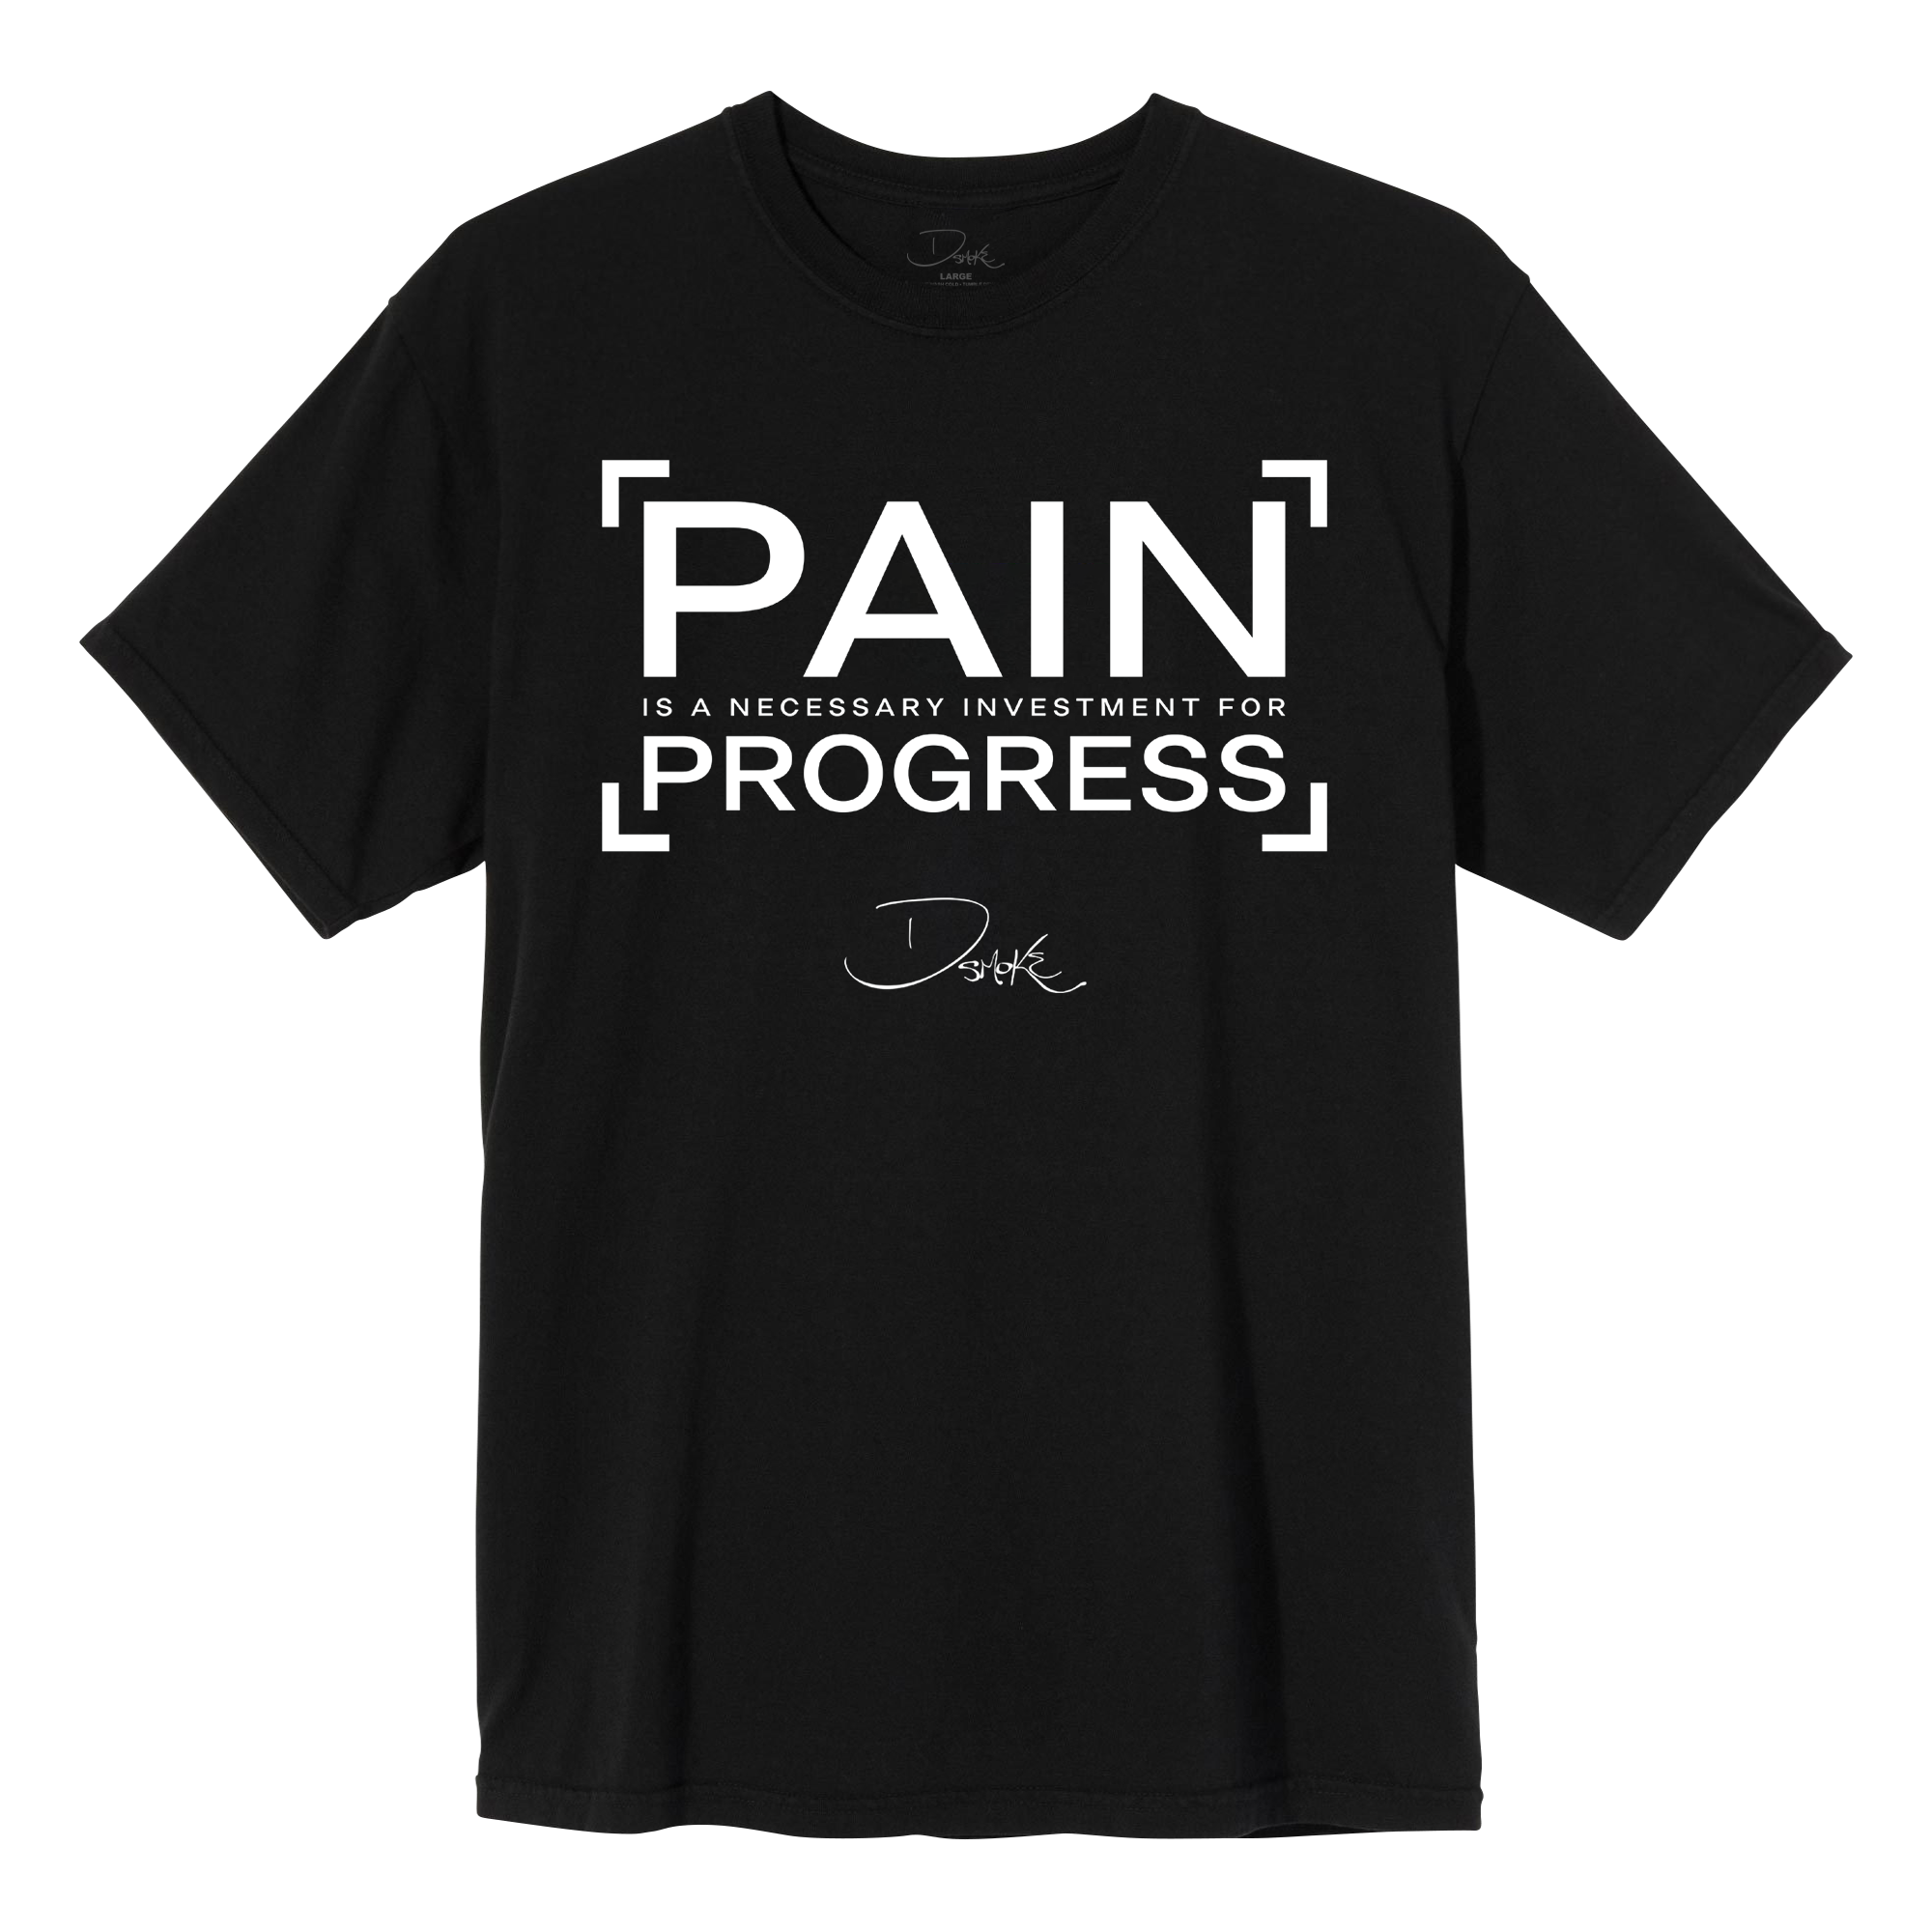 Growth Process T-Shirt - Black